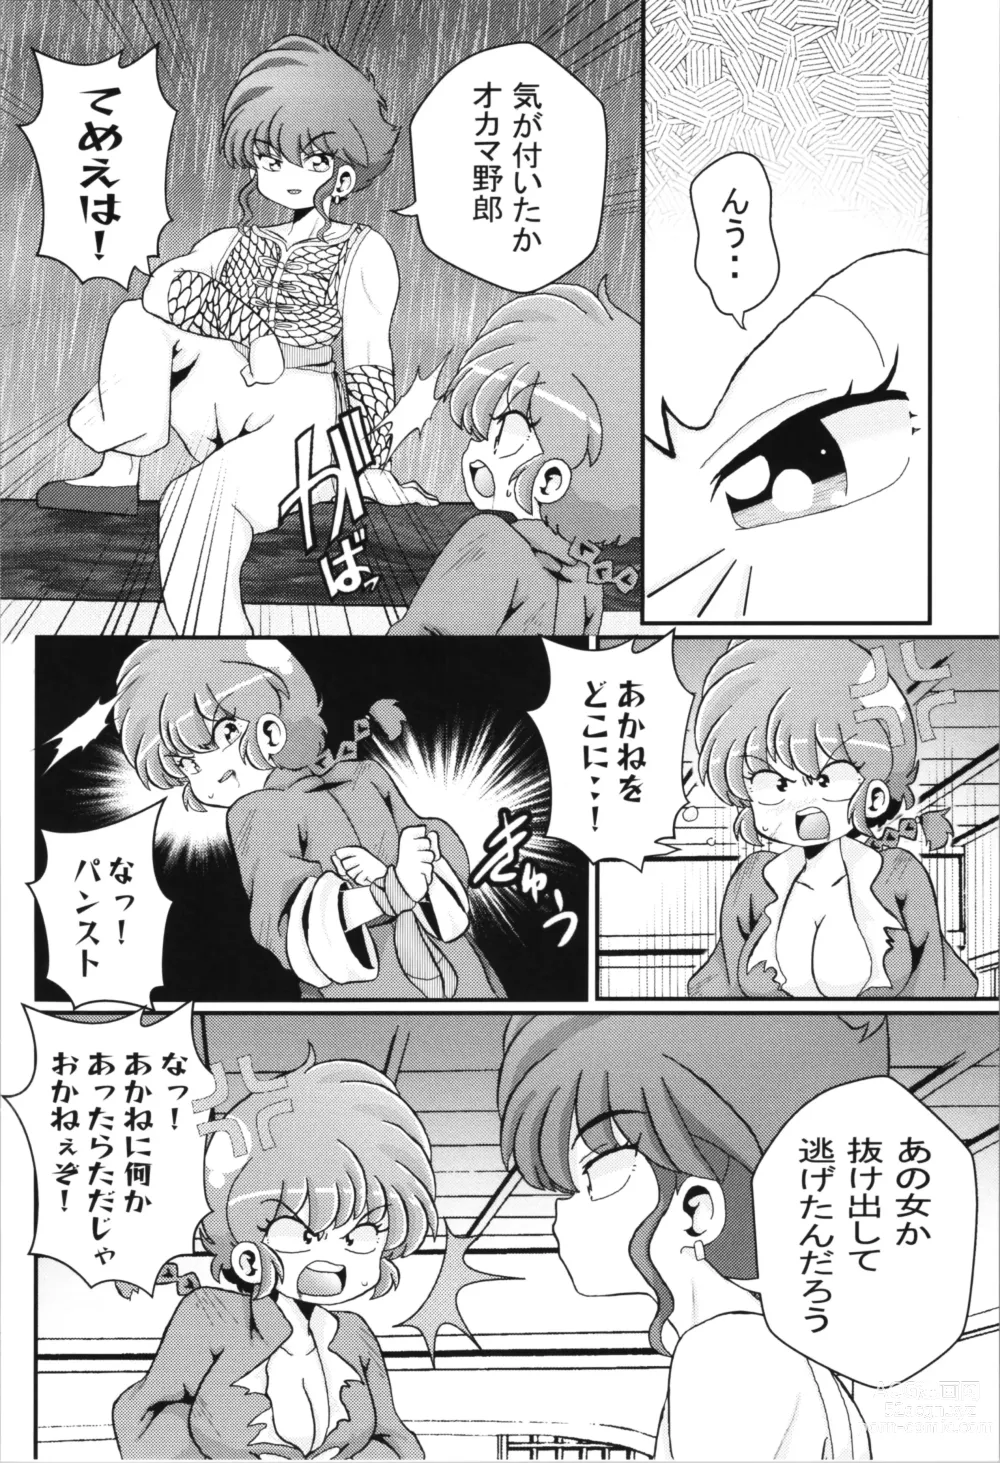 Page 6 of doujinshi You Too!